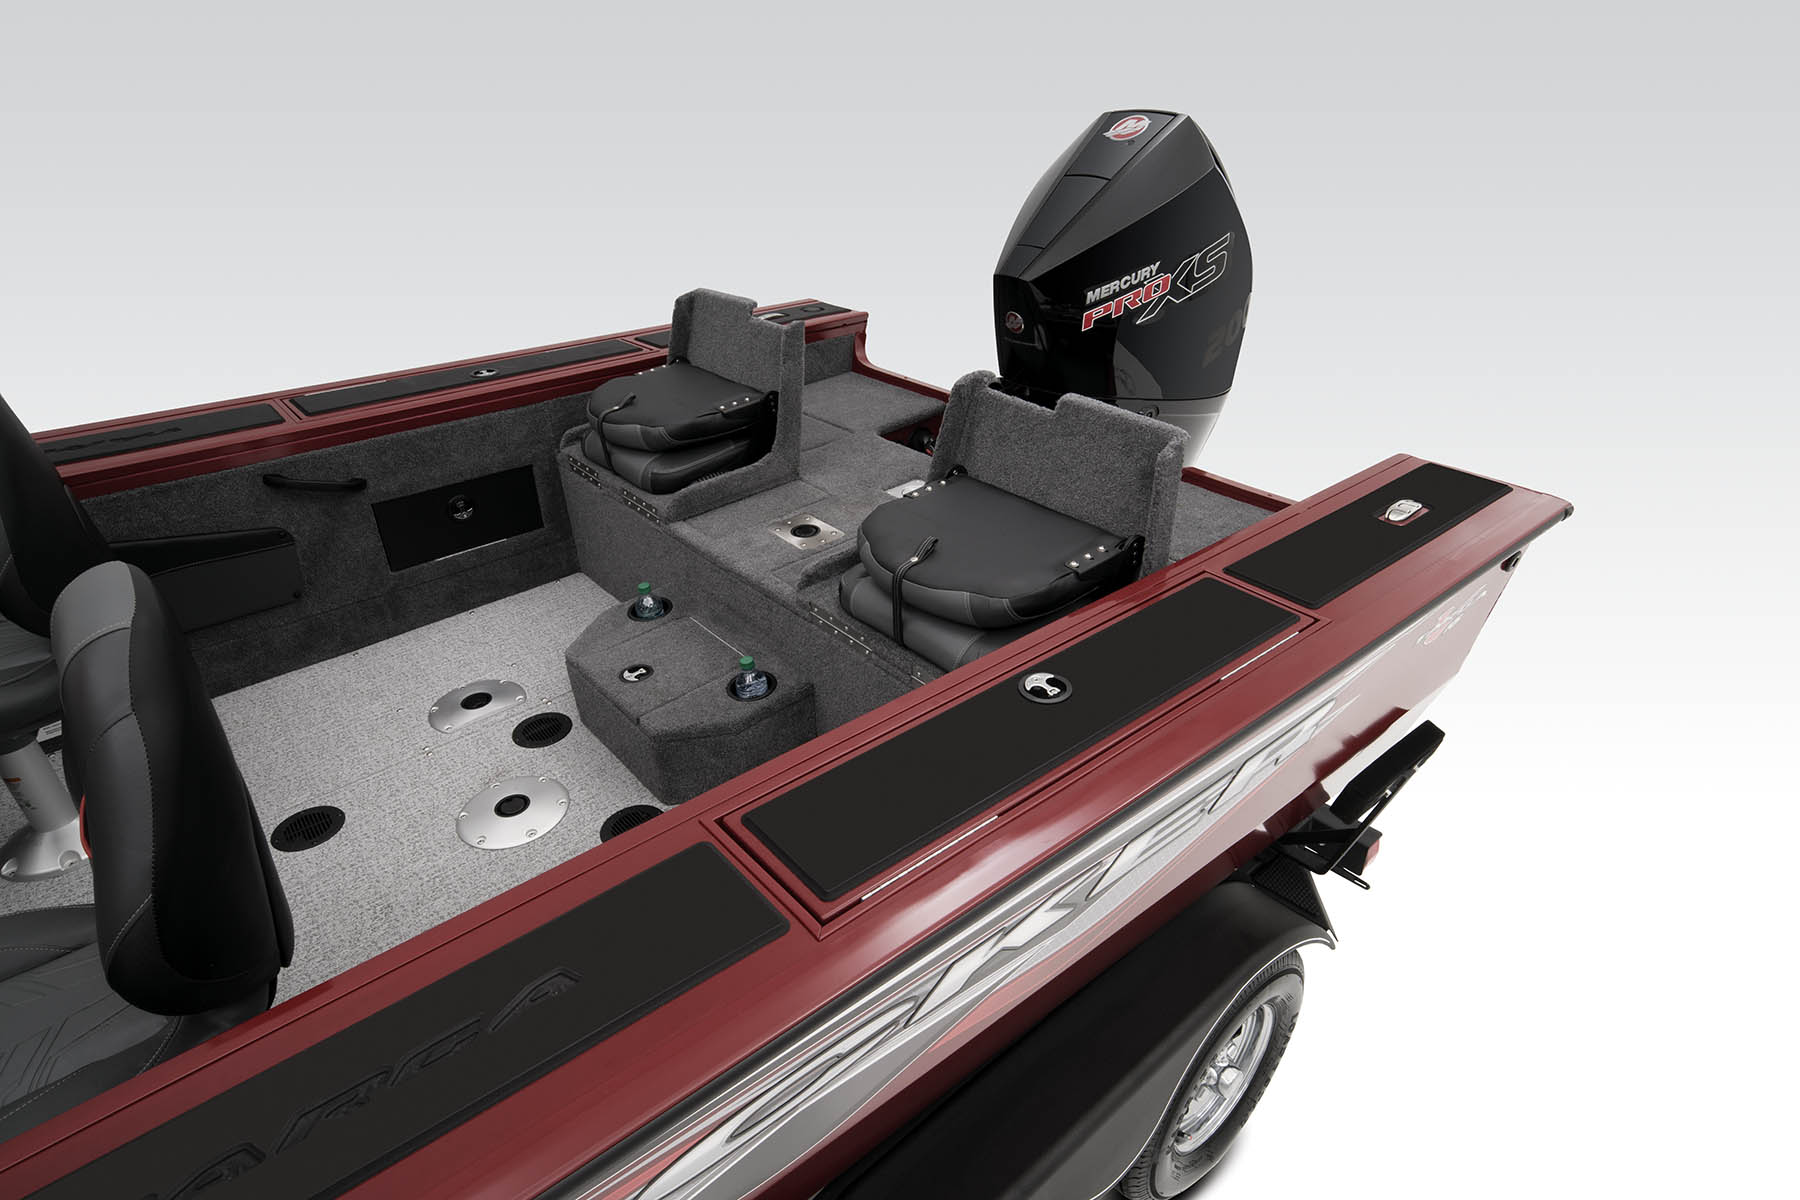 Top Tracker Targa V-18 Wt Combo W 200hp Pro-xs Boats For Sale in